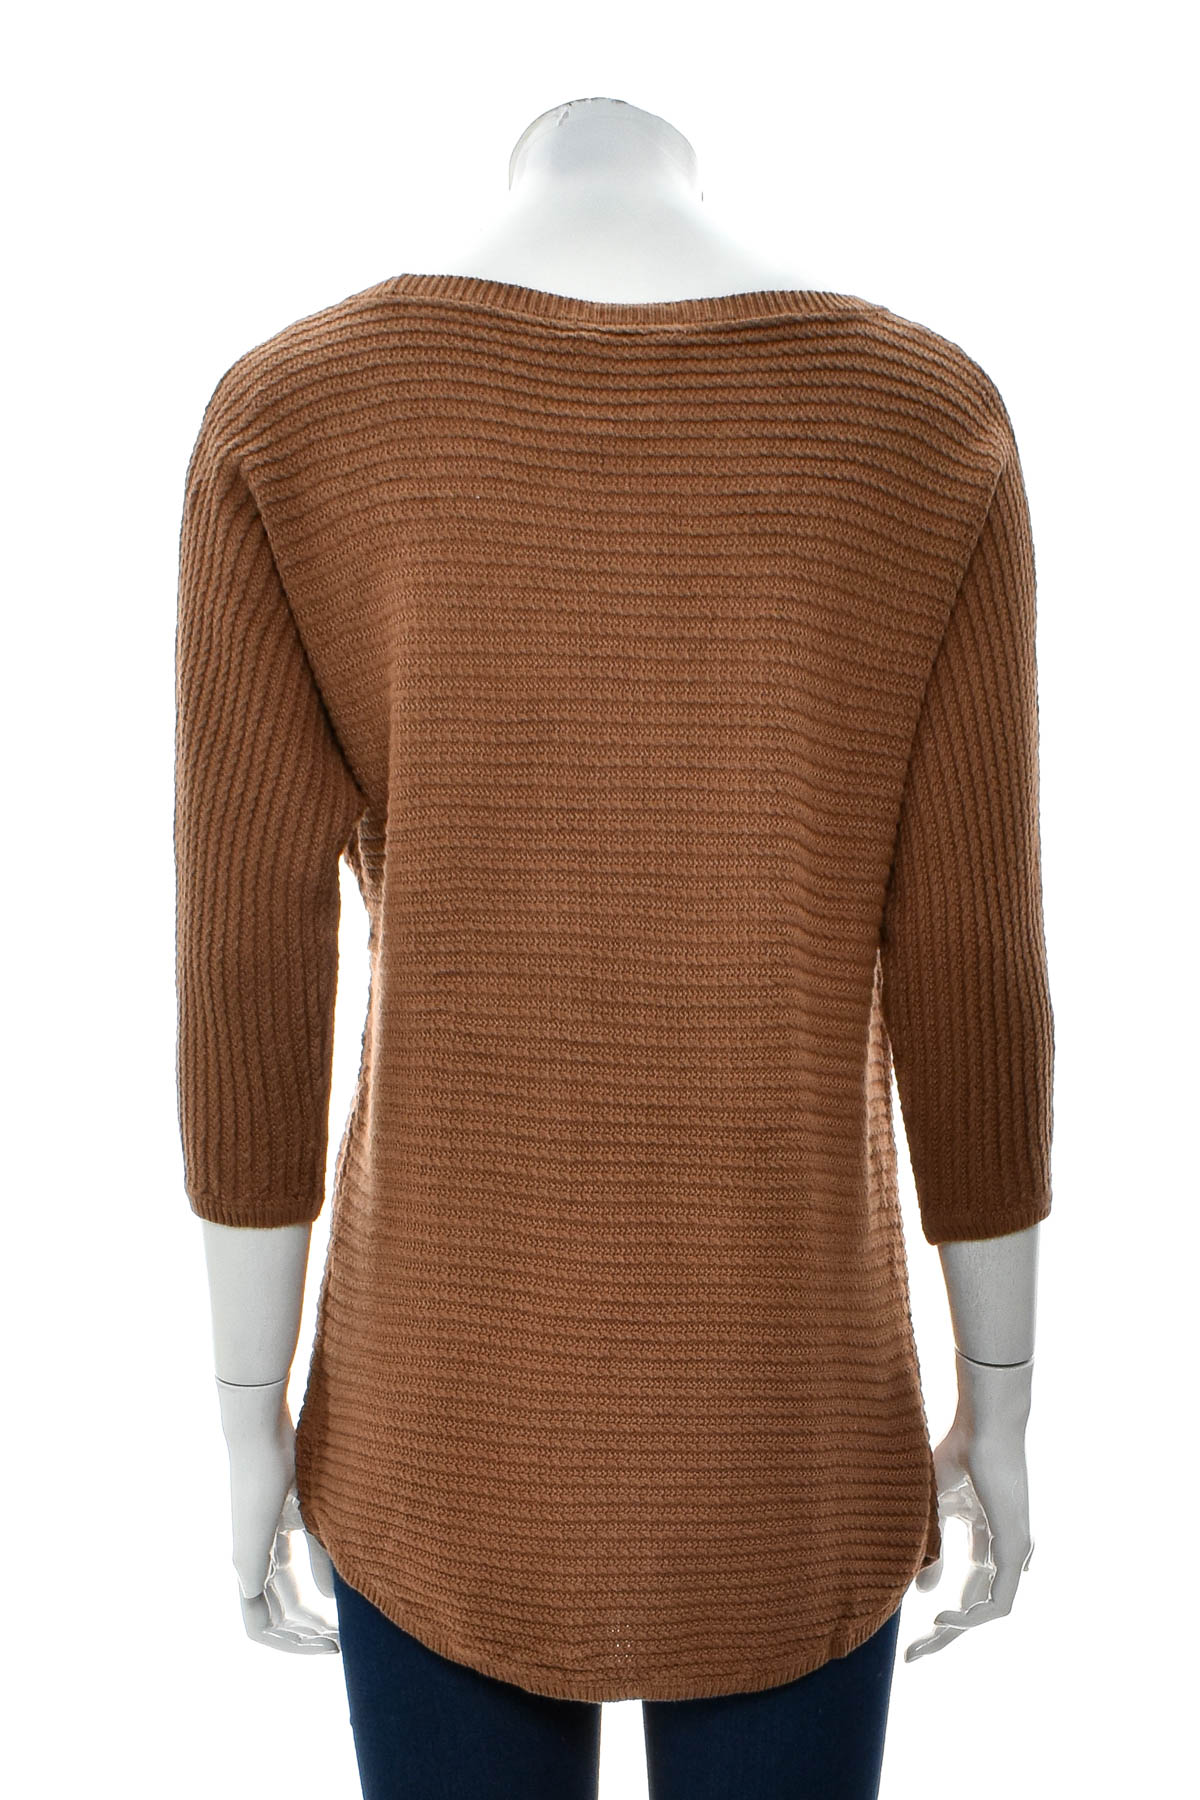 Women's sweater - New York & Company - 1